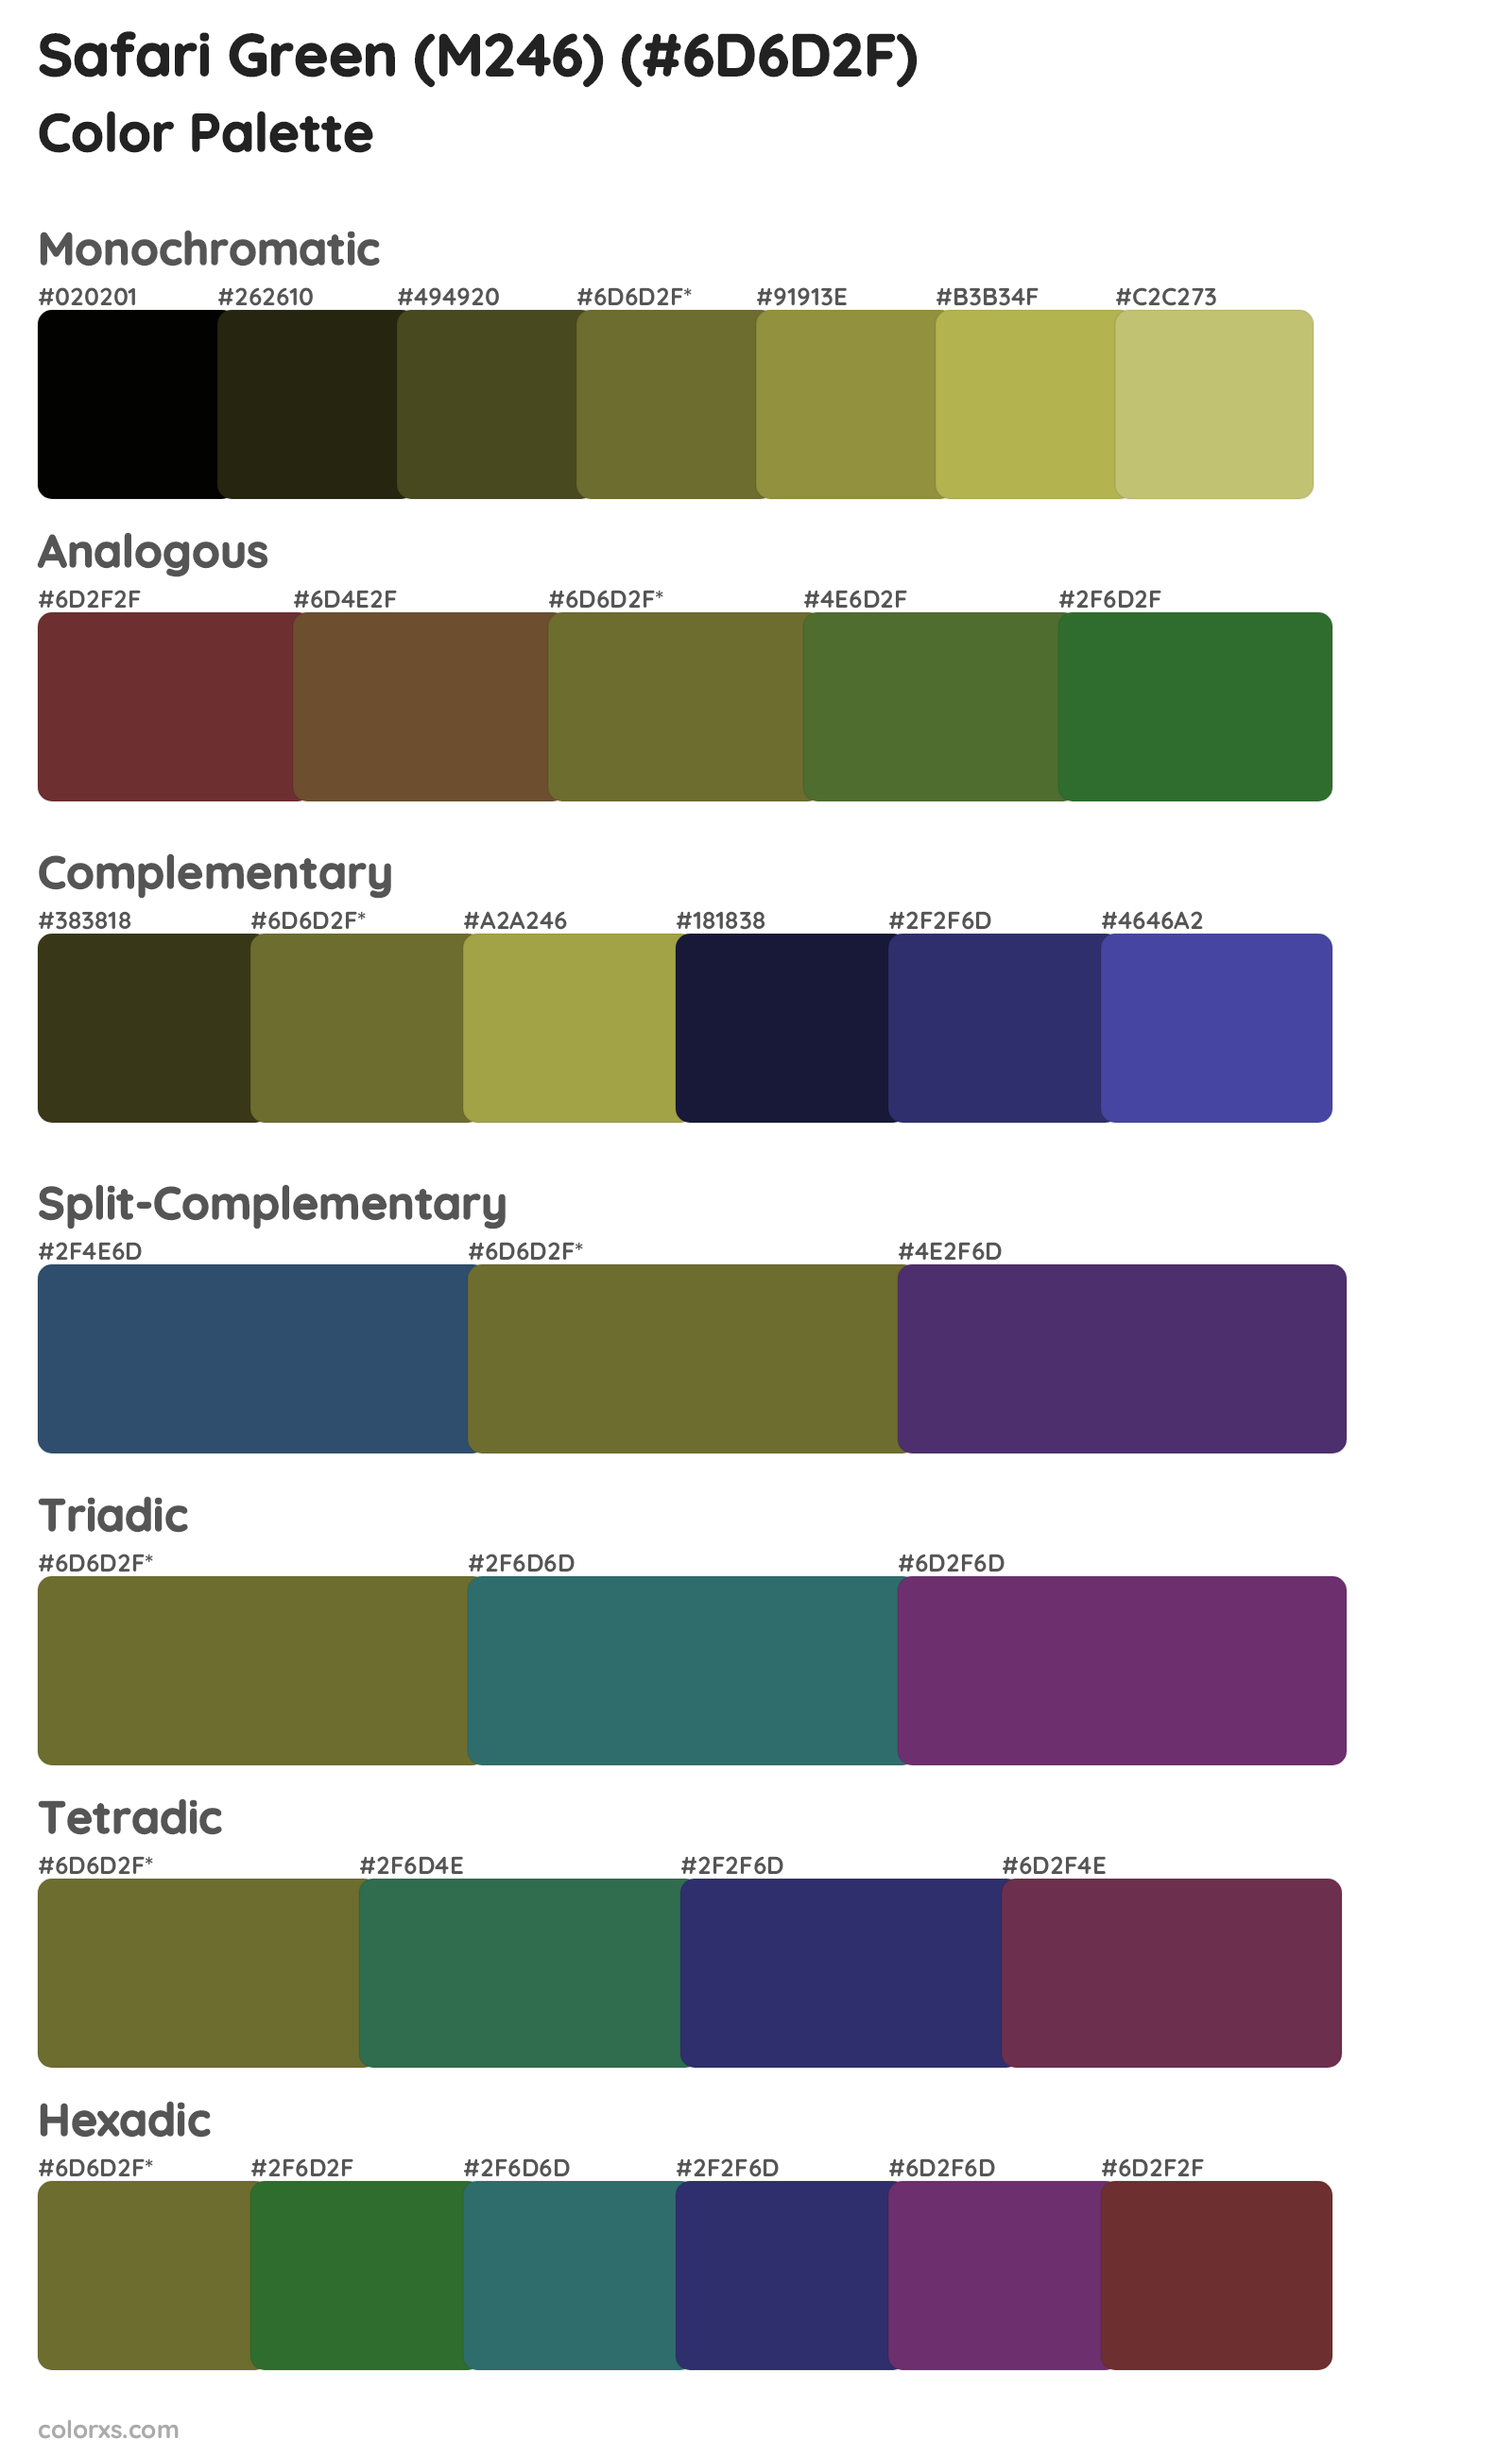 Safari Green (M246) Color Scheme Palettes